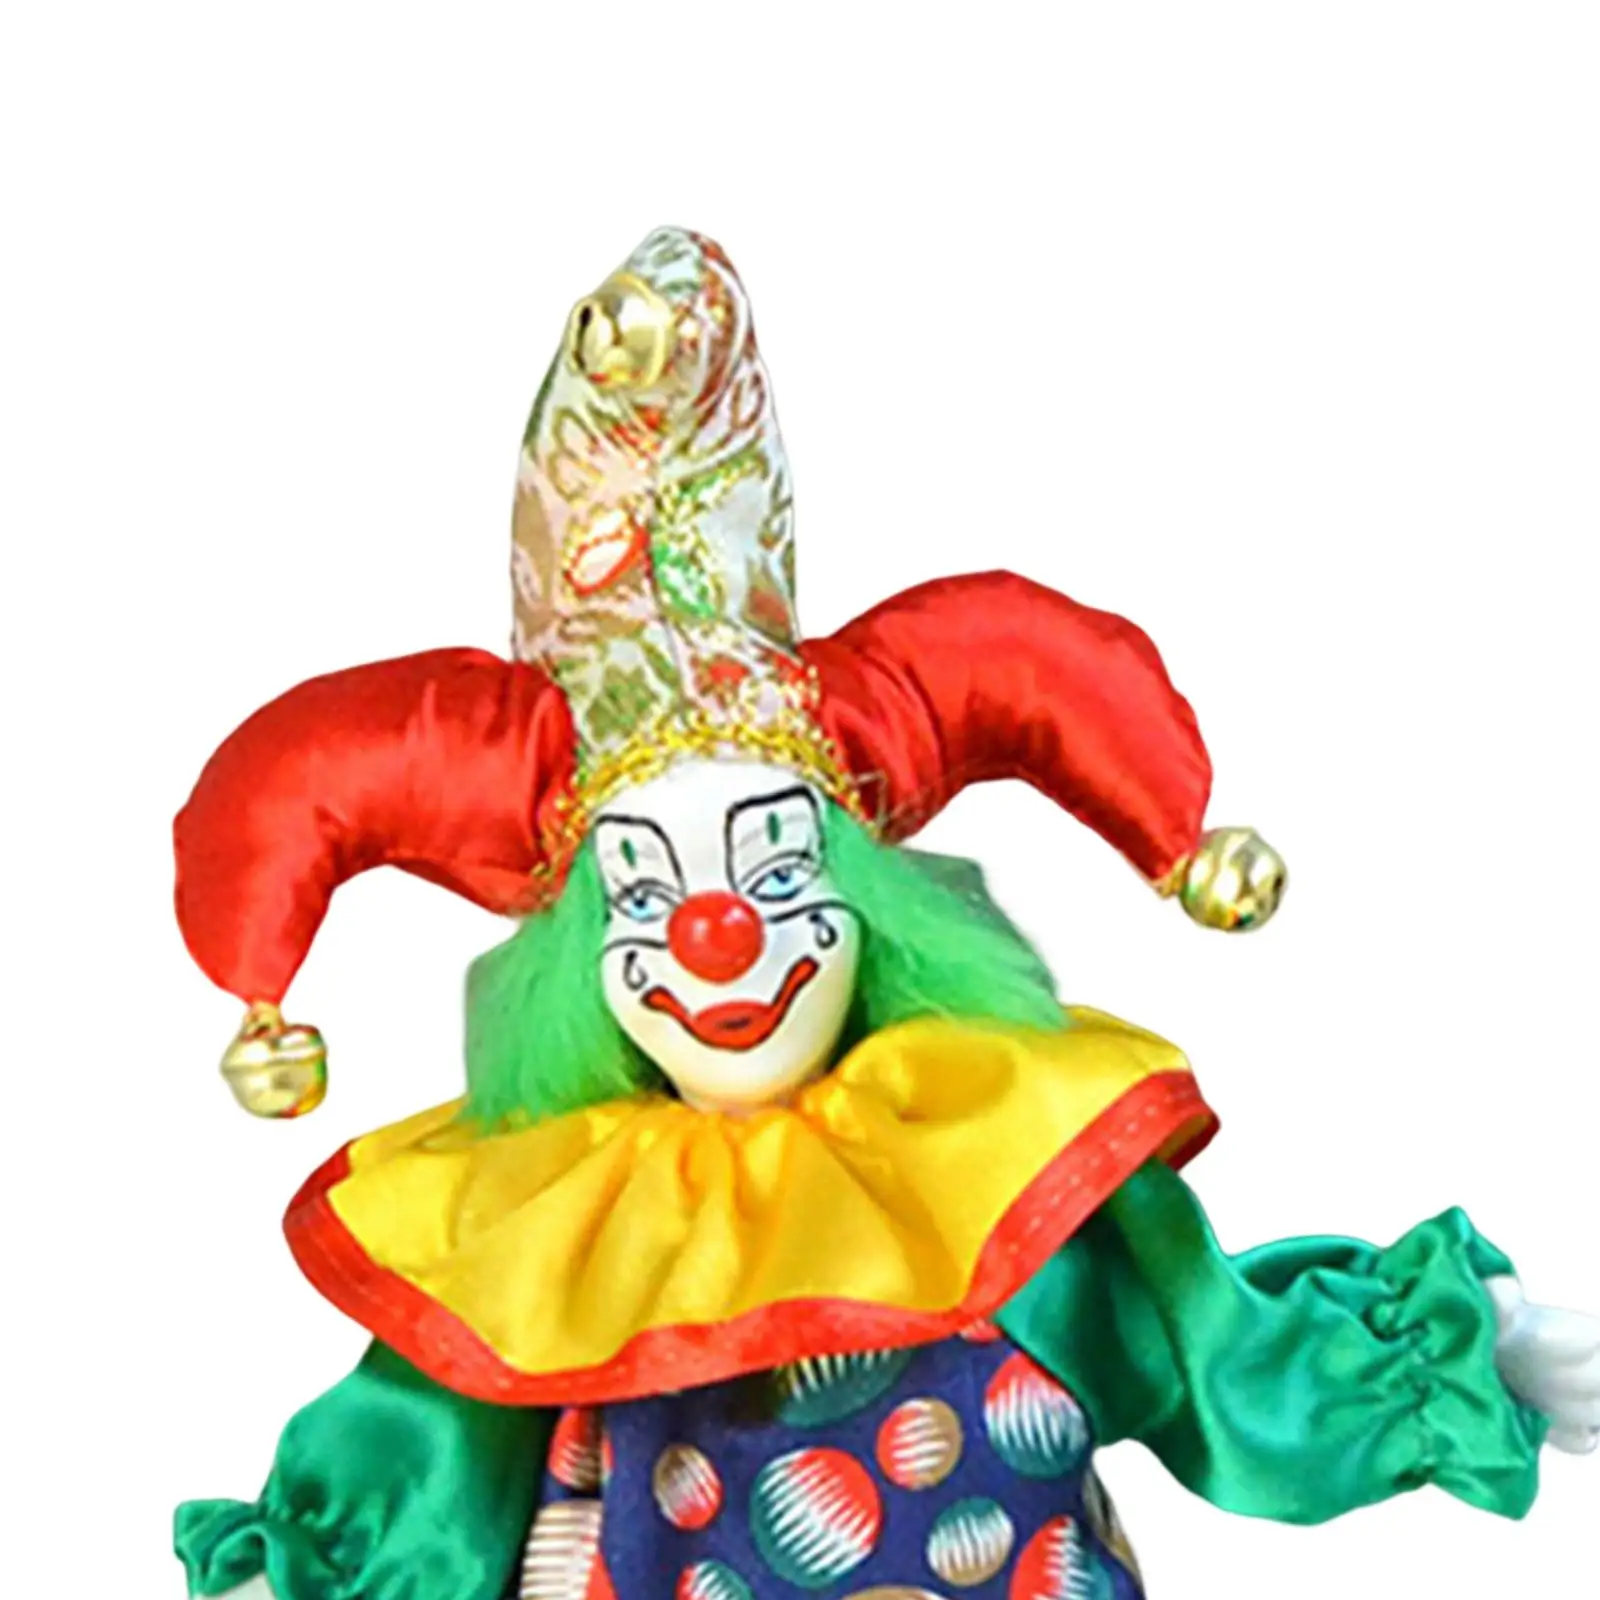 Funny Clown Figurine Decor Porcelain Dolls Gift Artwork Ornament 25cm for Housewarming Shop Window Desktop Bookshelf Adults Kids